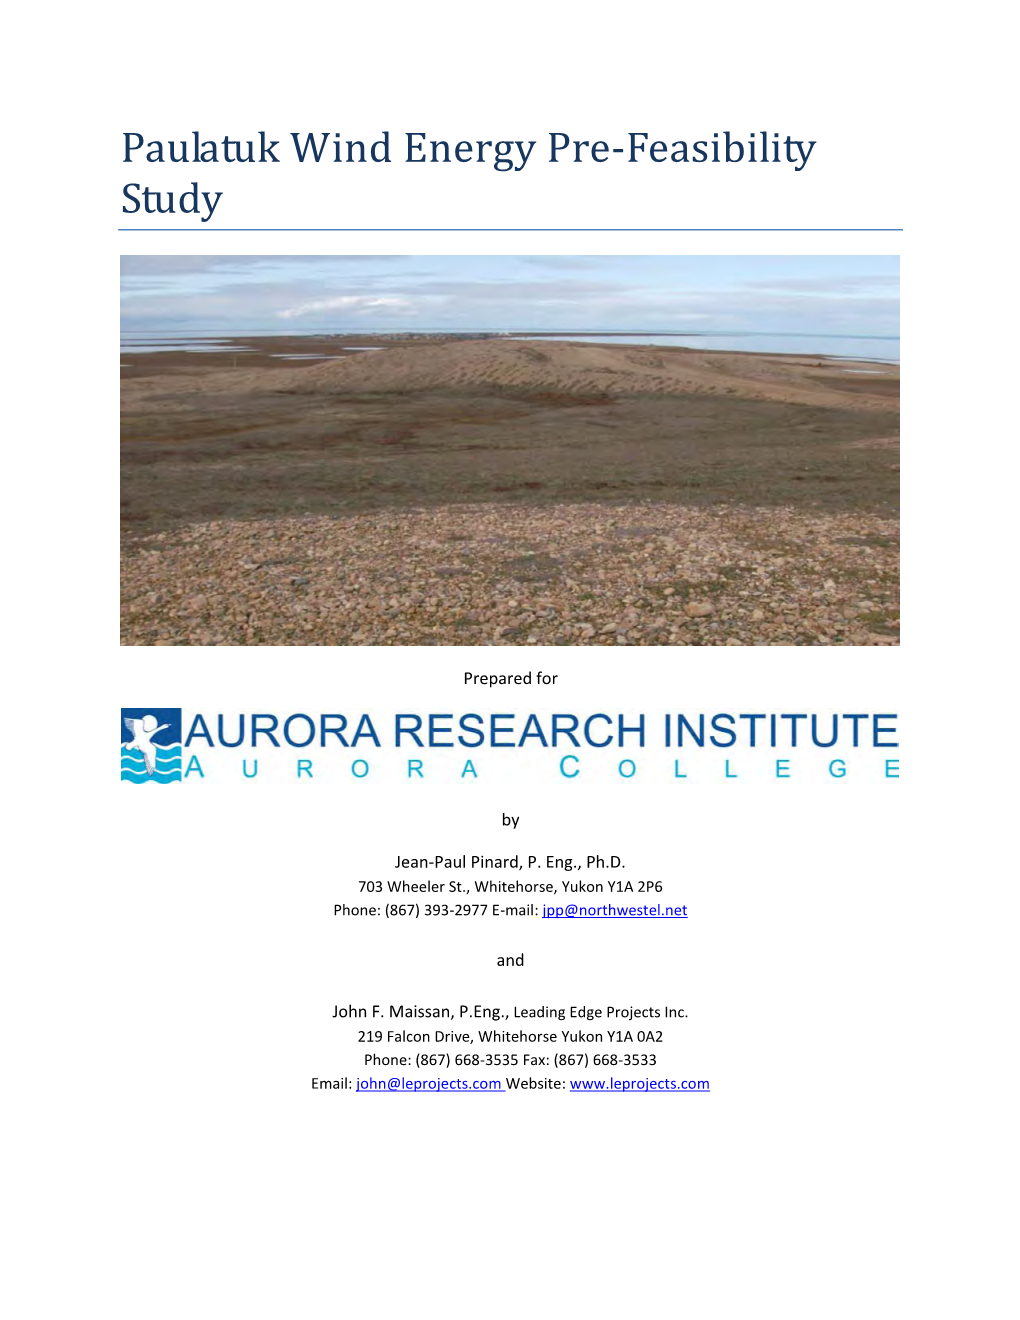 Paulatuk Wind Energy Pre-Feasibility Study